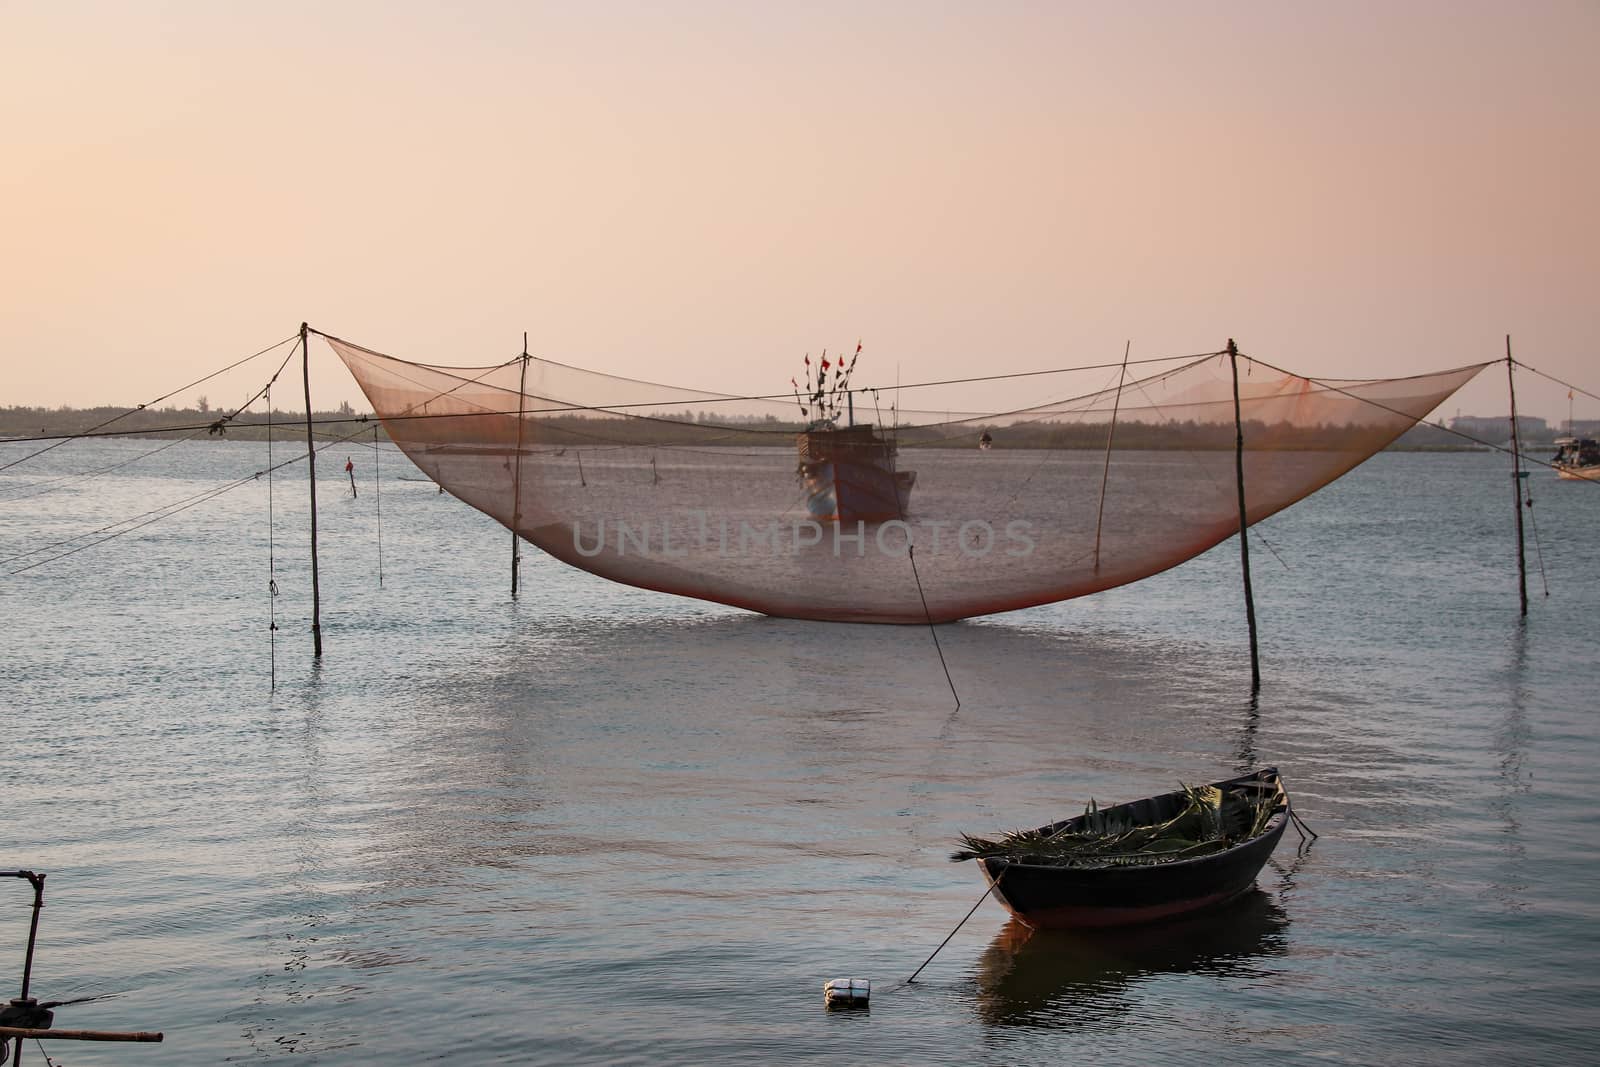 Stationary Lift Nets, Fishing method traditionally used in Vietnam